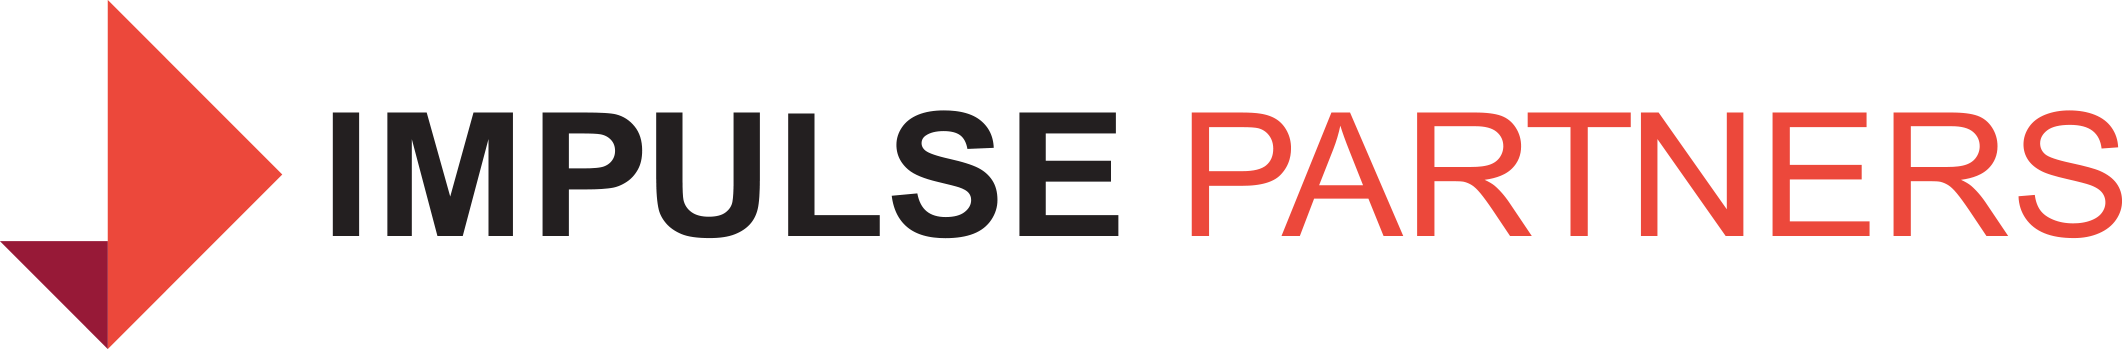 logo impulse partners